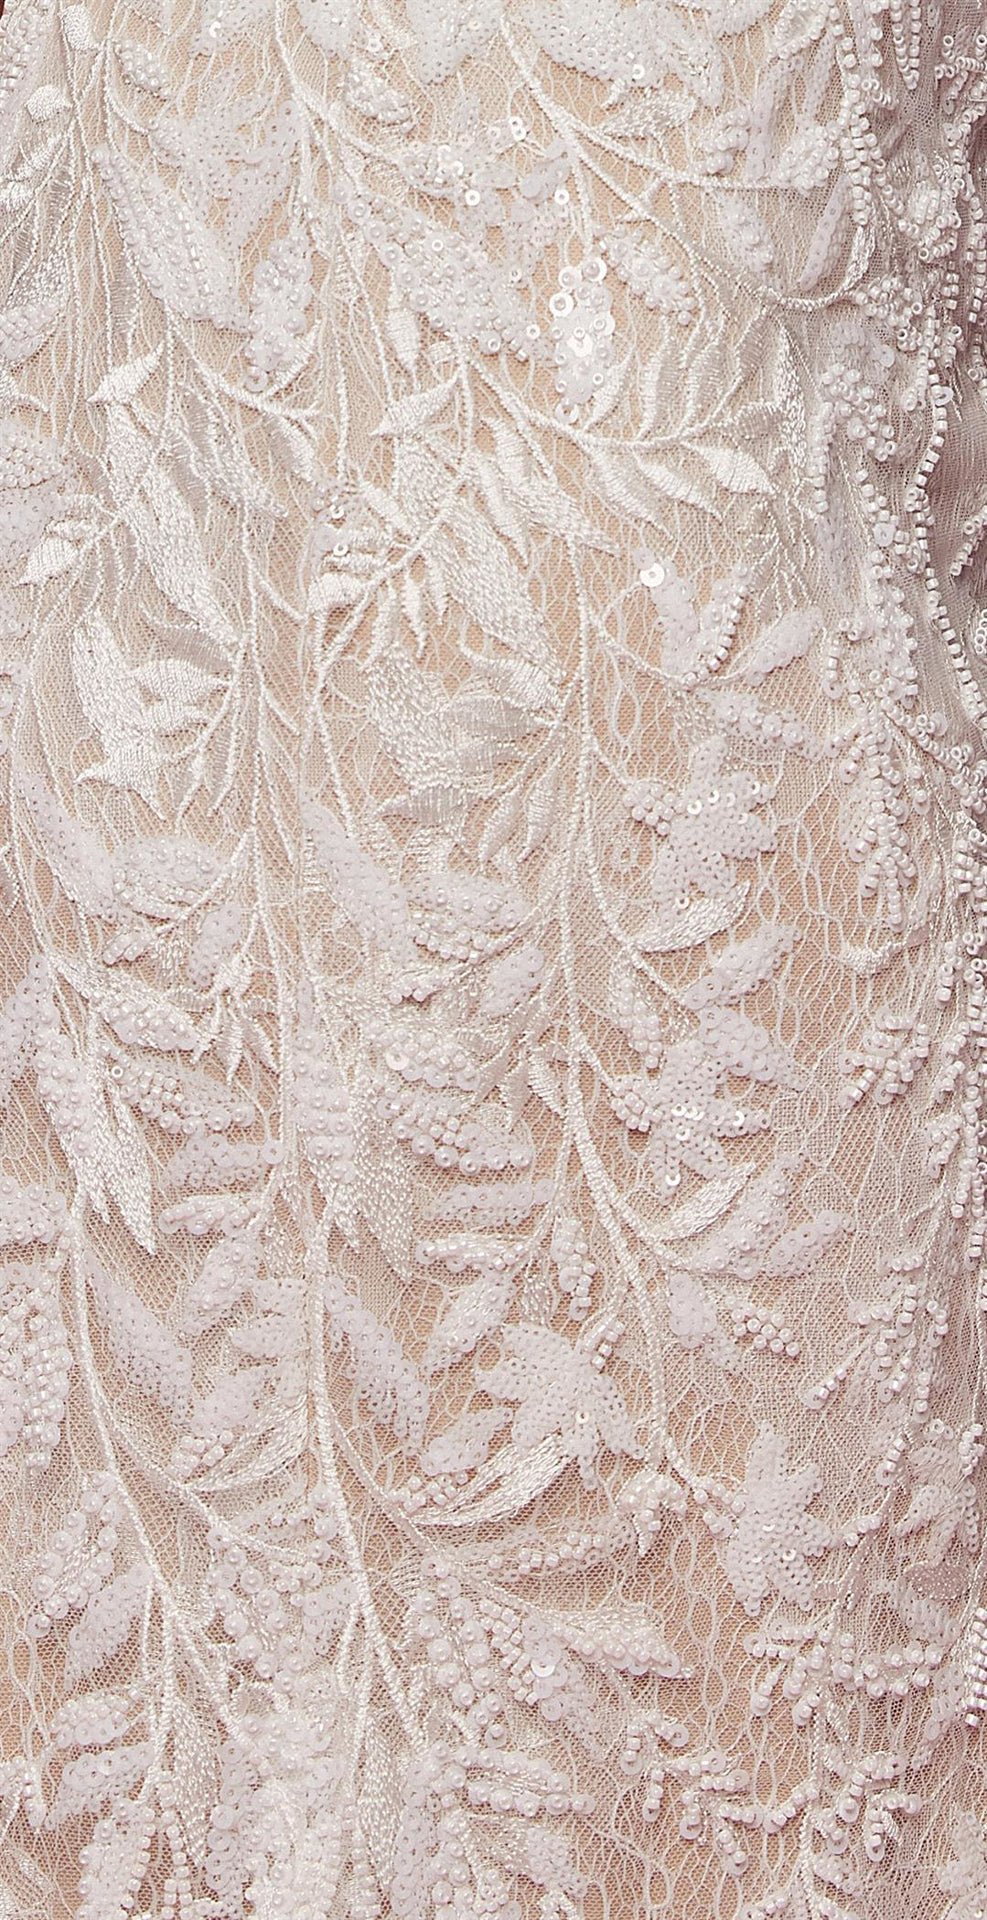 Embroidered Lace IIlusion V-Neck Open V-Back Mermaid Long Wedding Dress NXJE915-Wedding Dress-smcfashion.com